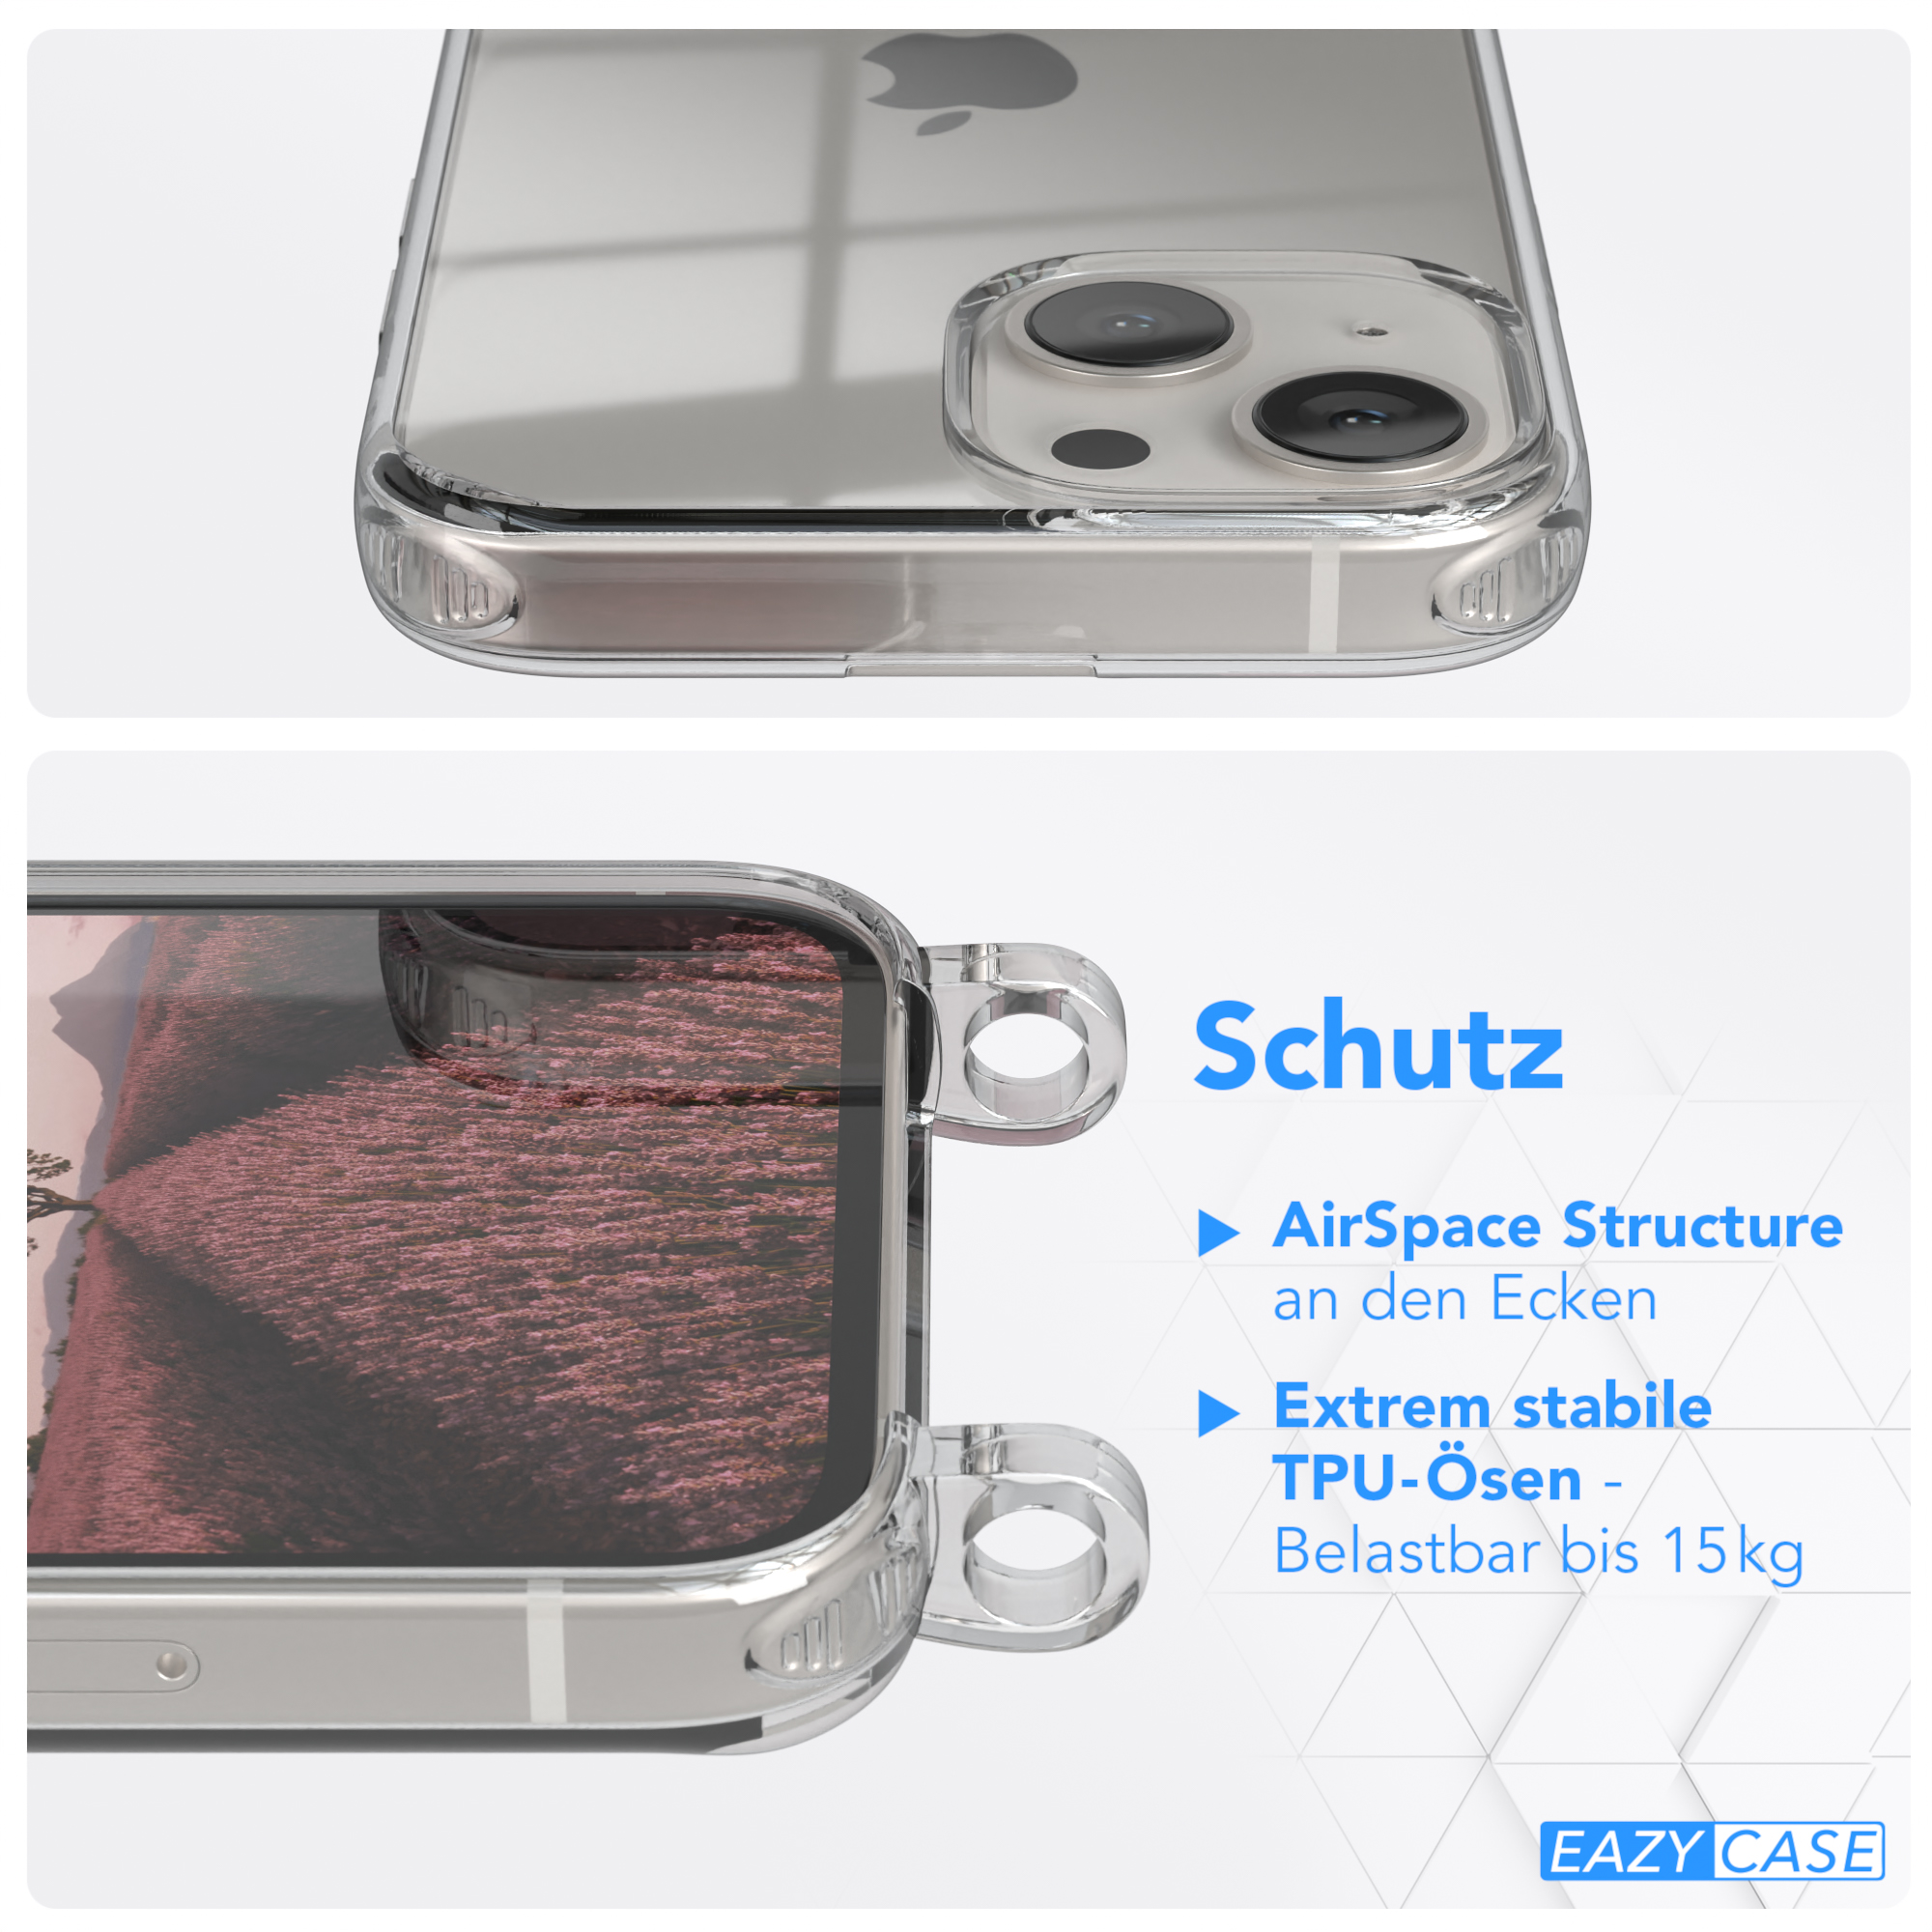 Cover CASE iPhone EAZY mit Uni Umhängeband, Clear Umhängetasche, Altrosa Mini, 13 Apple,